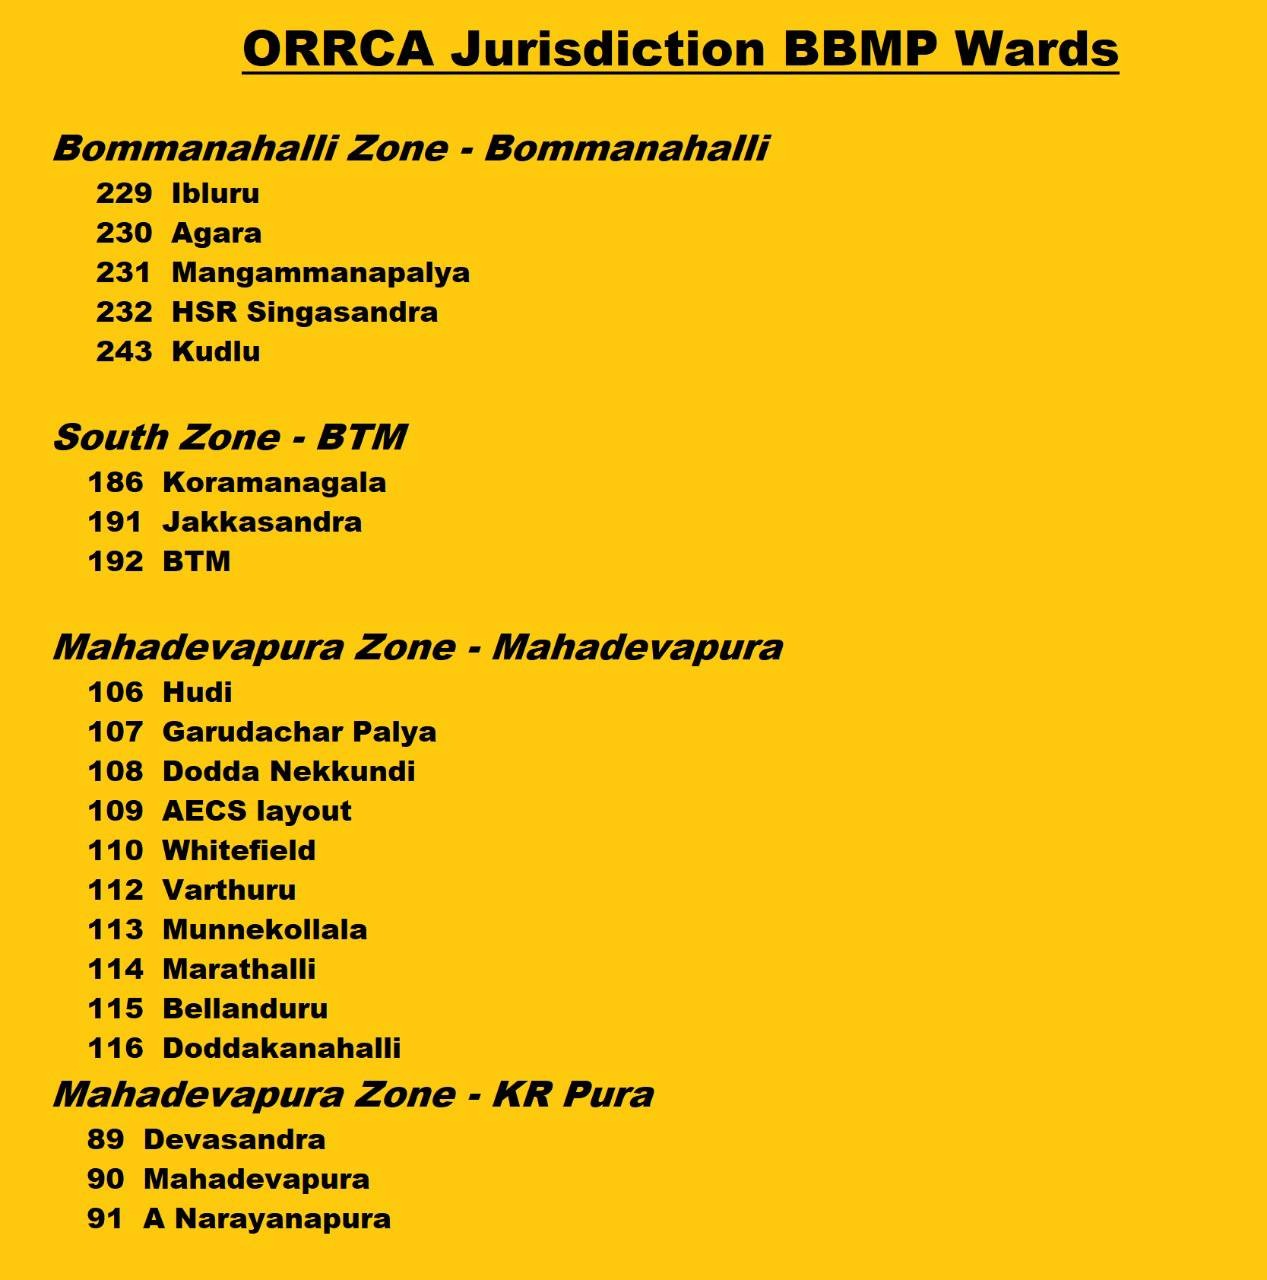 Orrca jurisdiction BBMP Wards